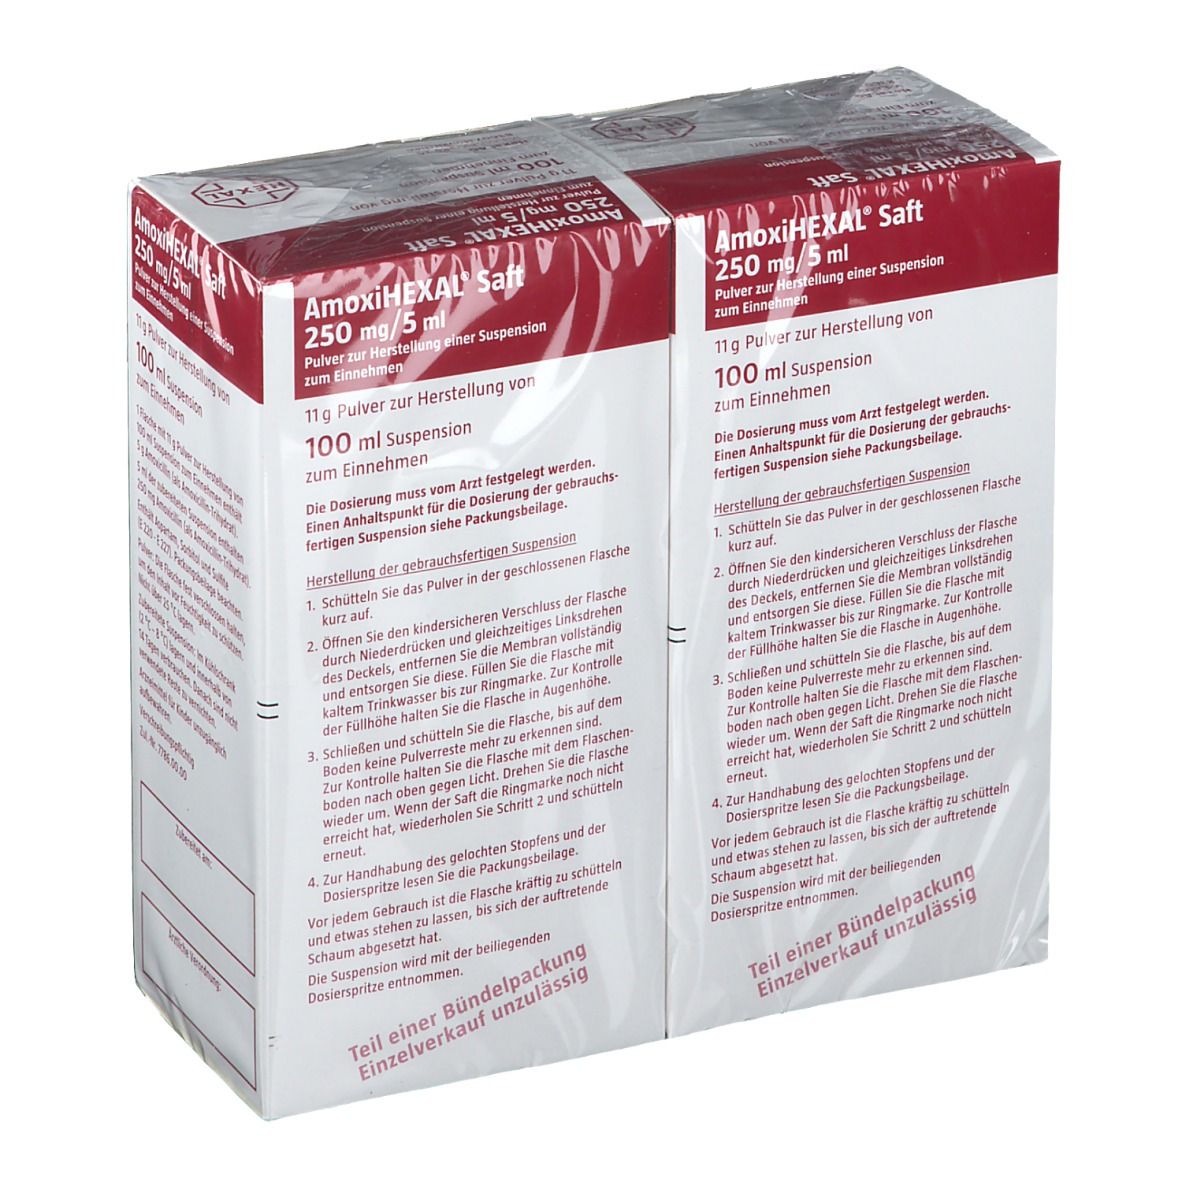 AmoxiHEXAL® Saft 250 mg/5 ml